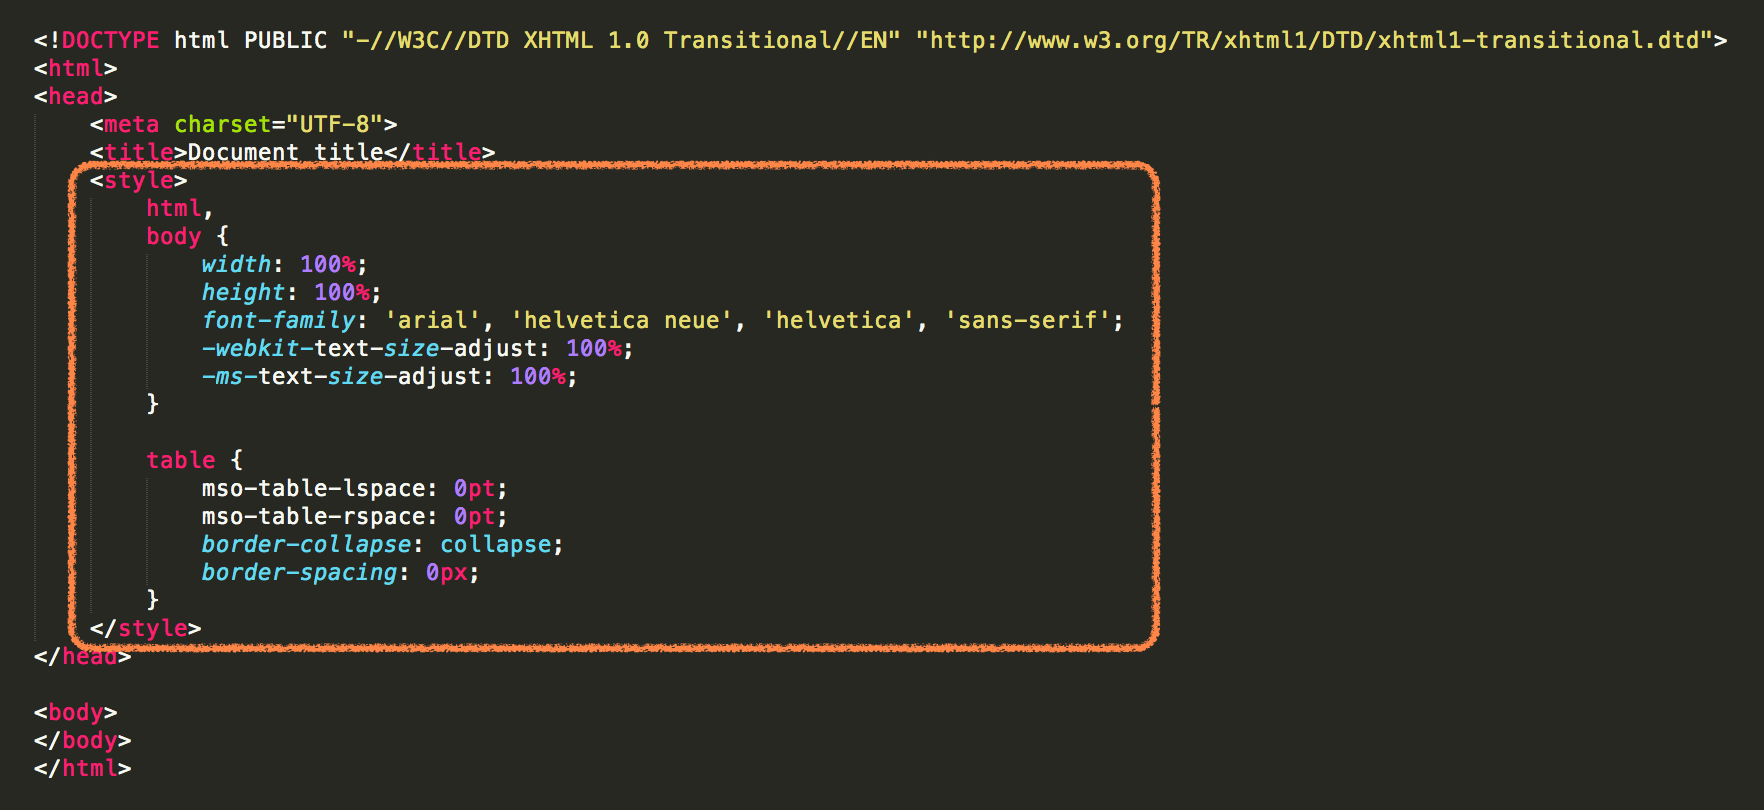 Adaptation of the Custom HTML in Stripo